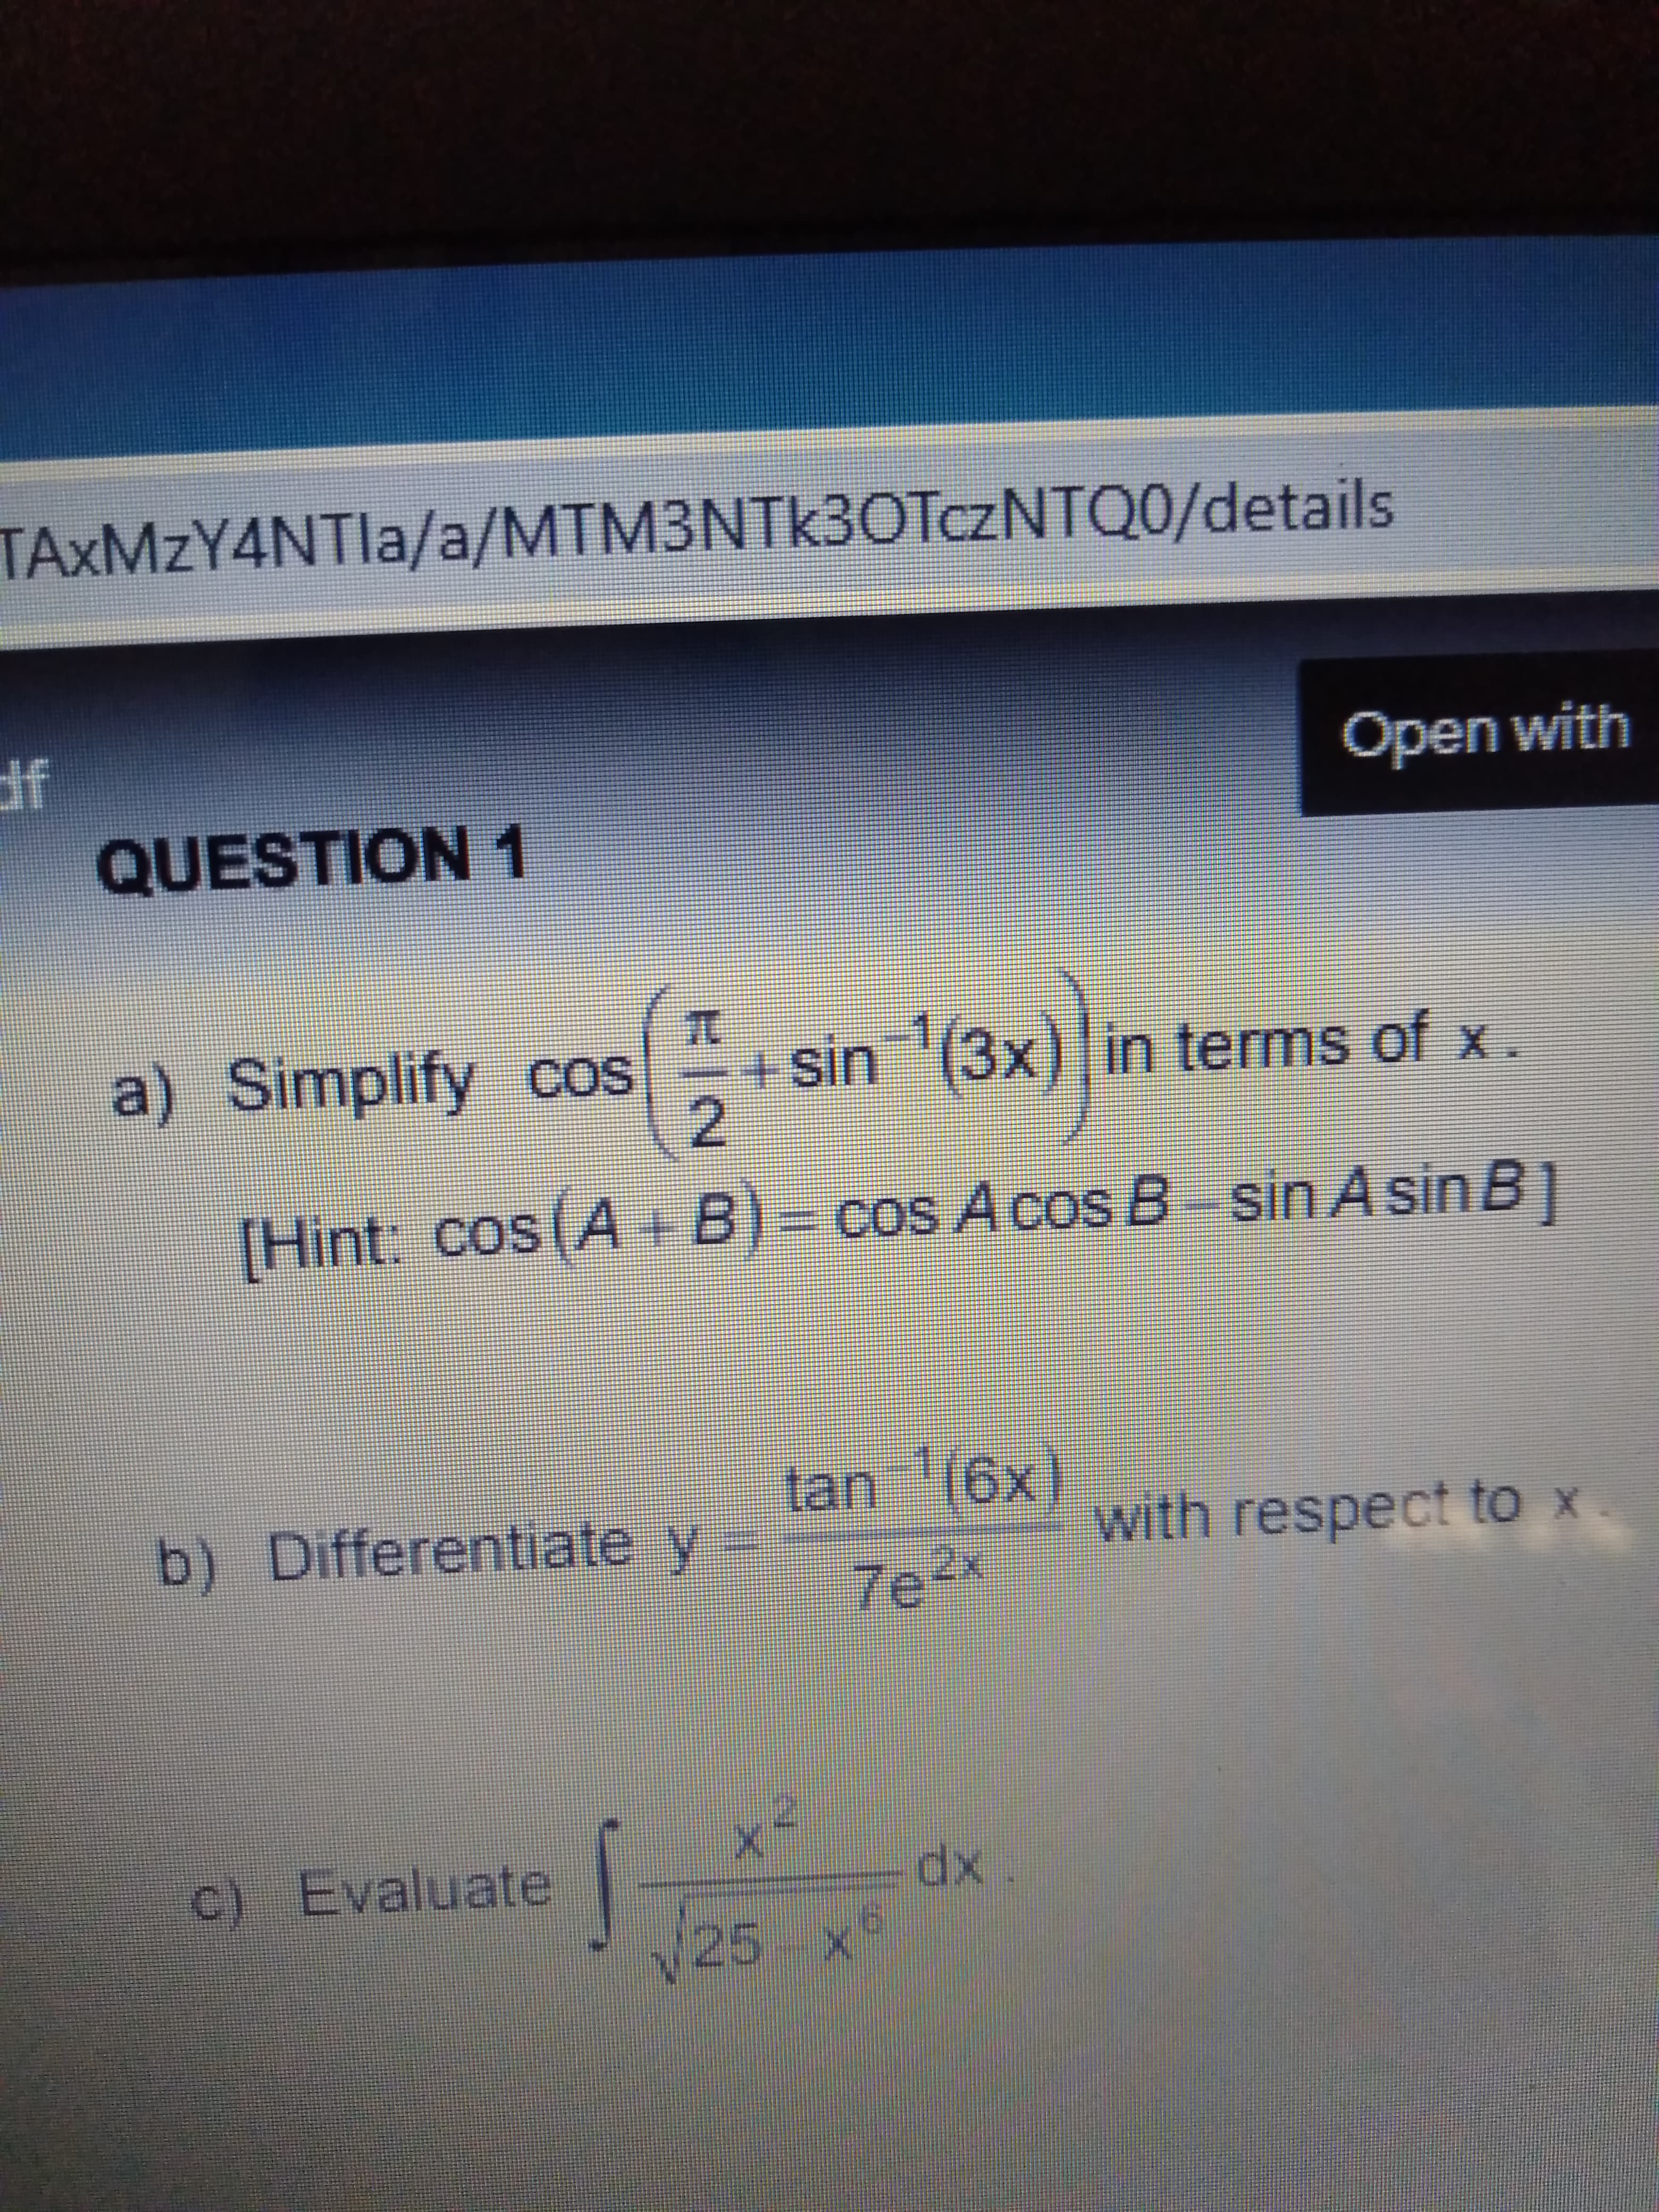 a) Simplify cos
"+ sin (3x) in terms of x .
2
[Hint: cos(A B)= cos Acos B sin A sin B1
